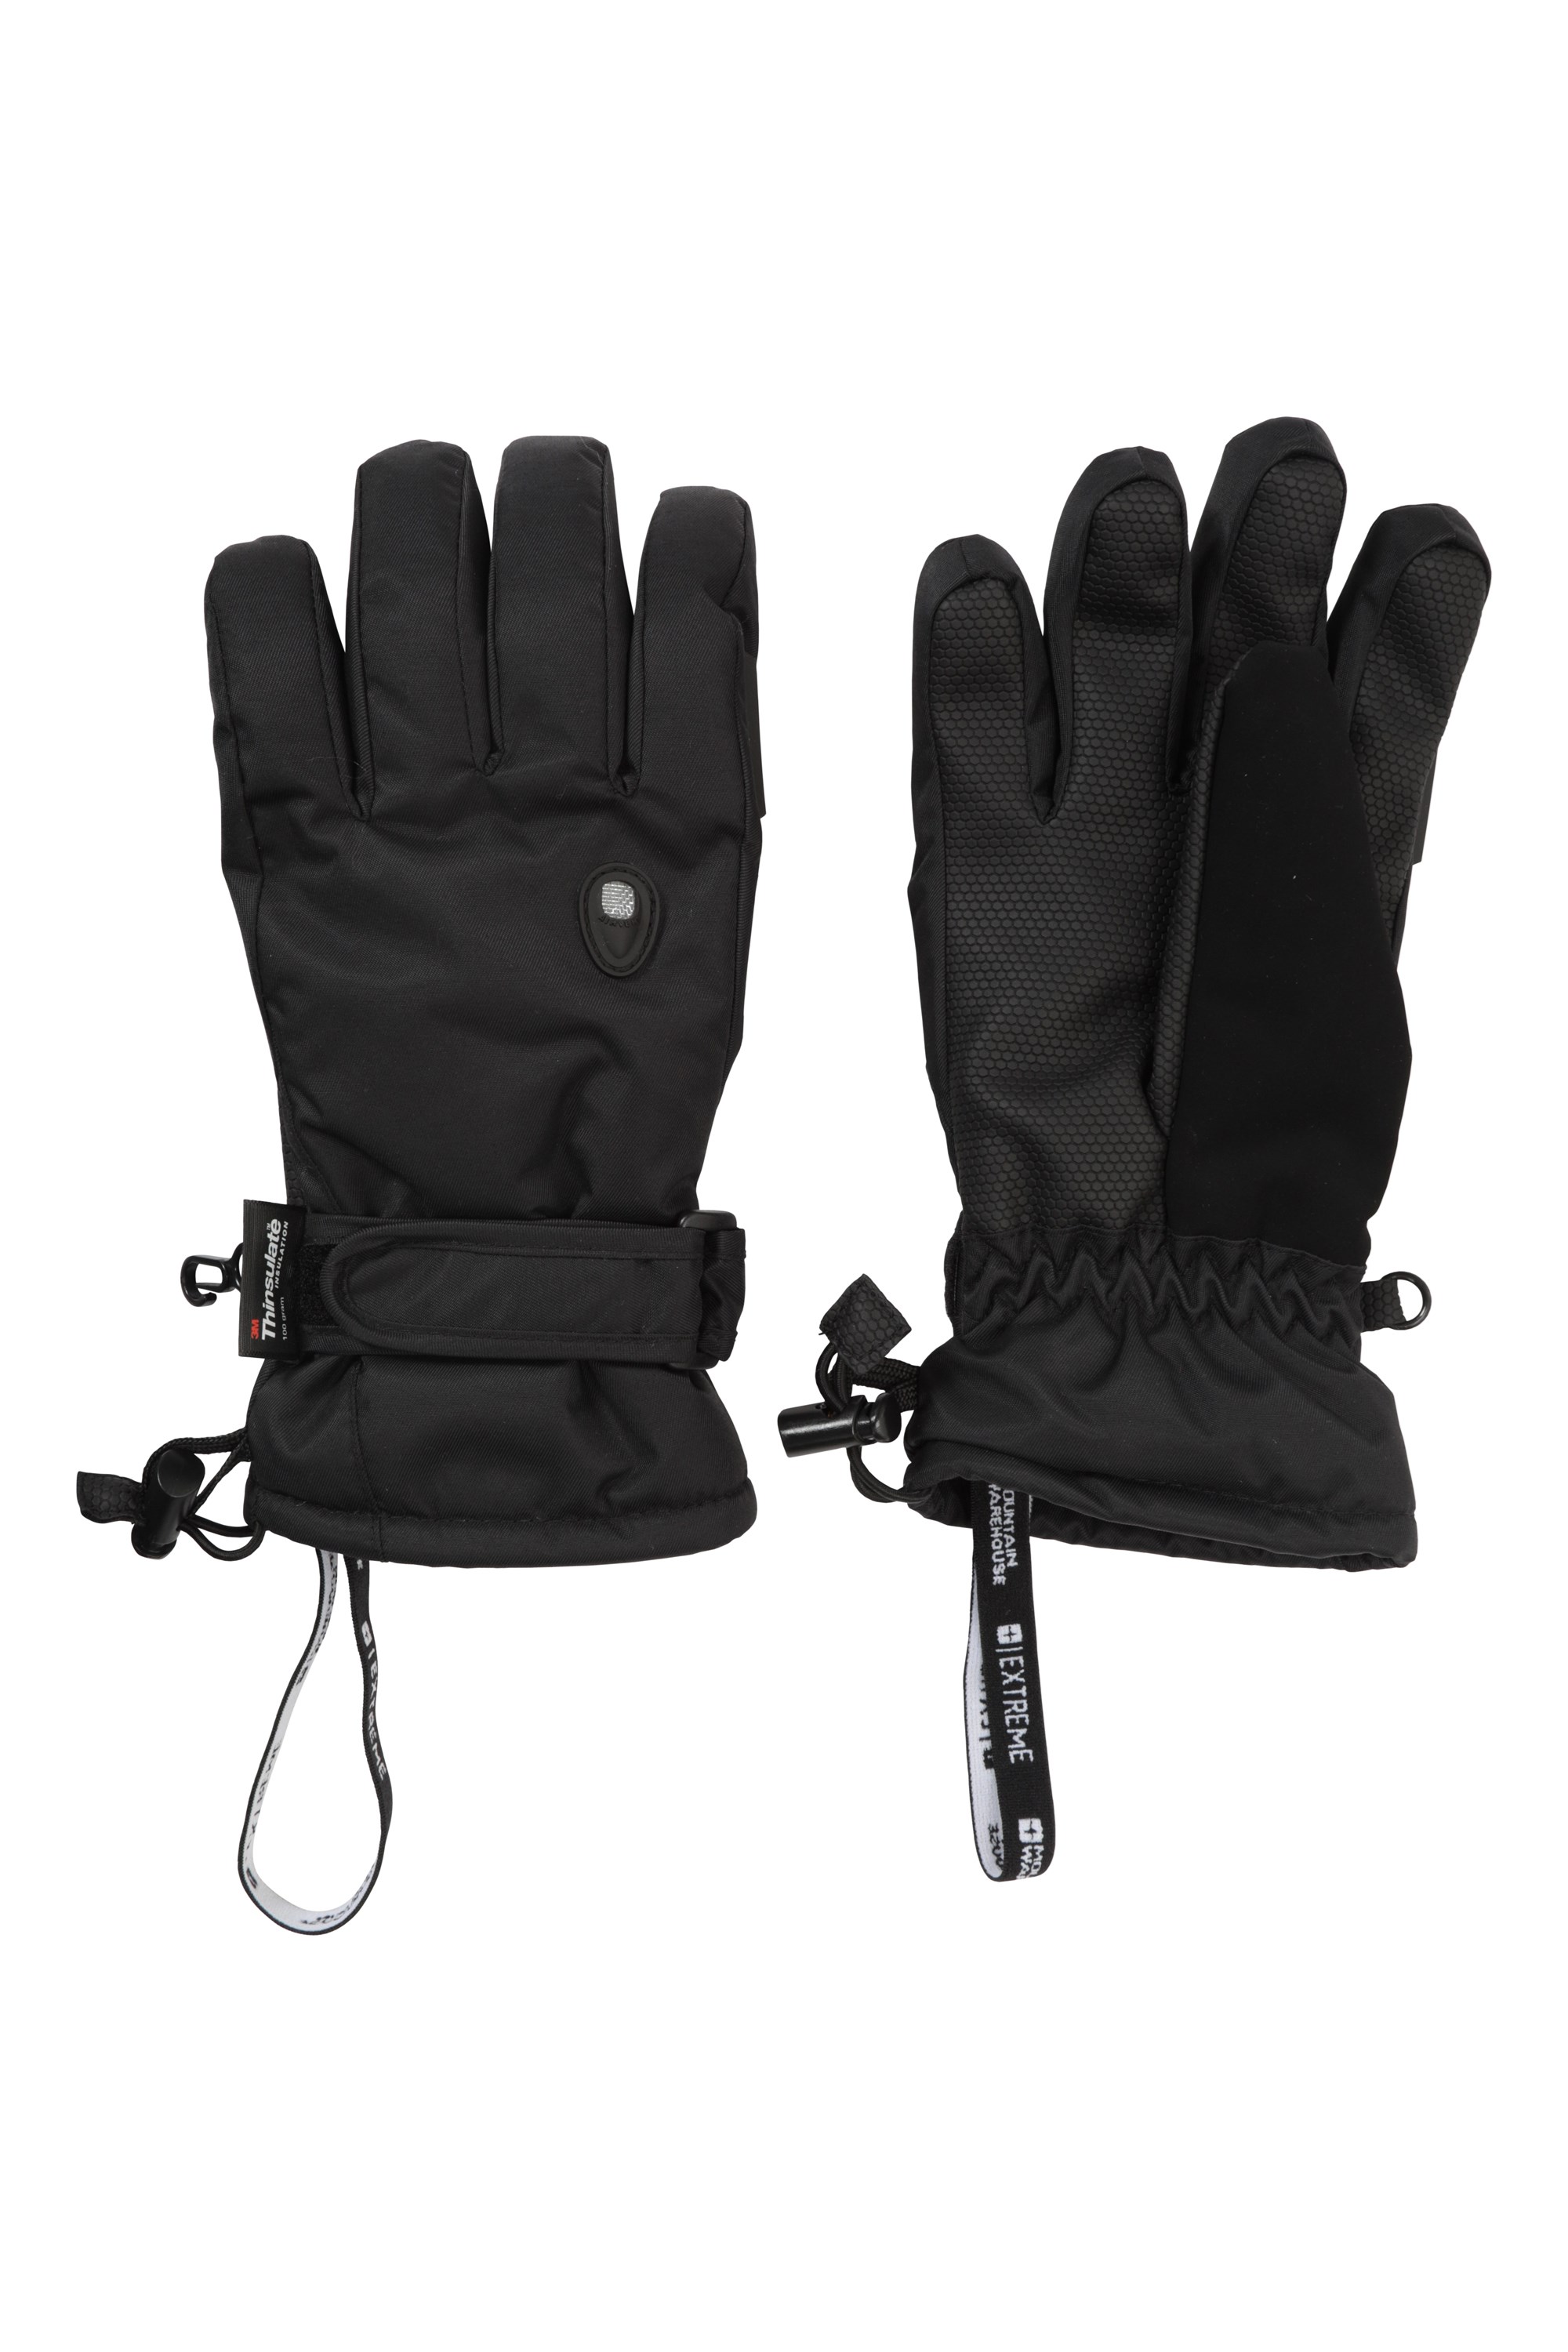 Mountain Warehouse Extreme Waterproof Womens Ski Gloves Nose Wipe in Black 